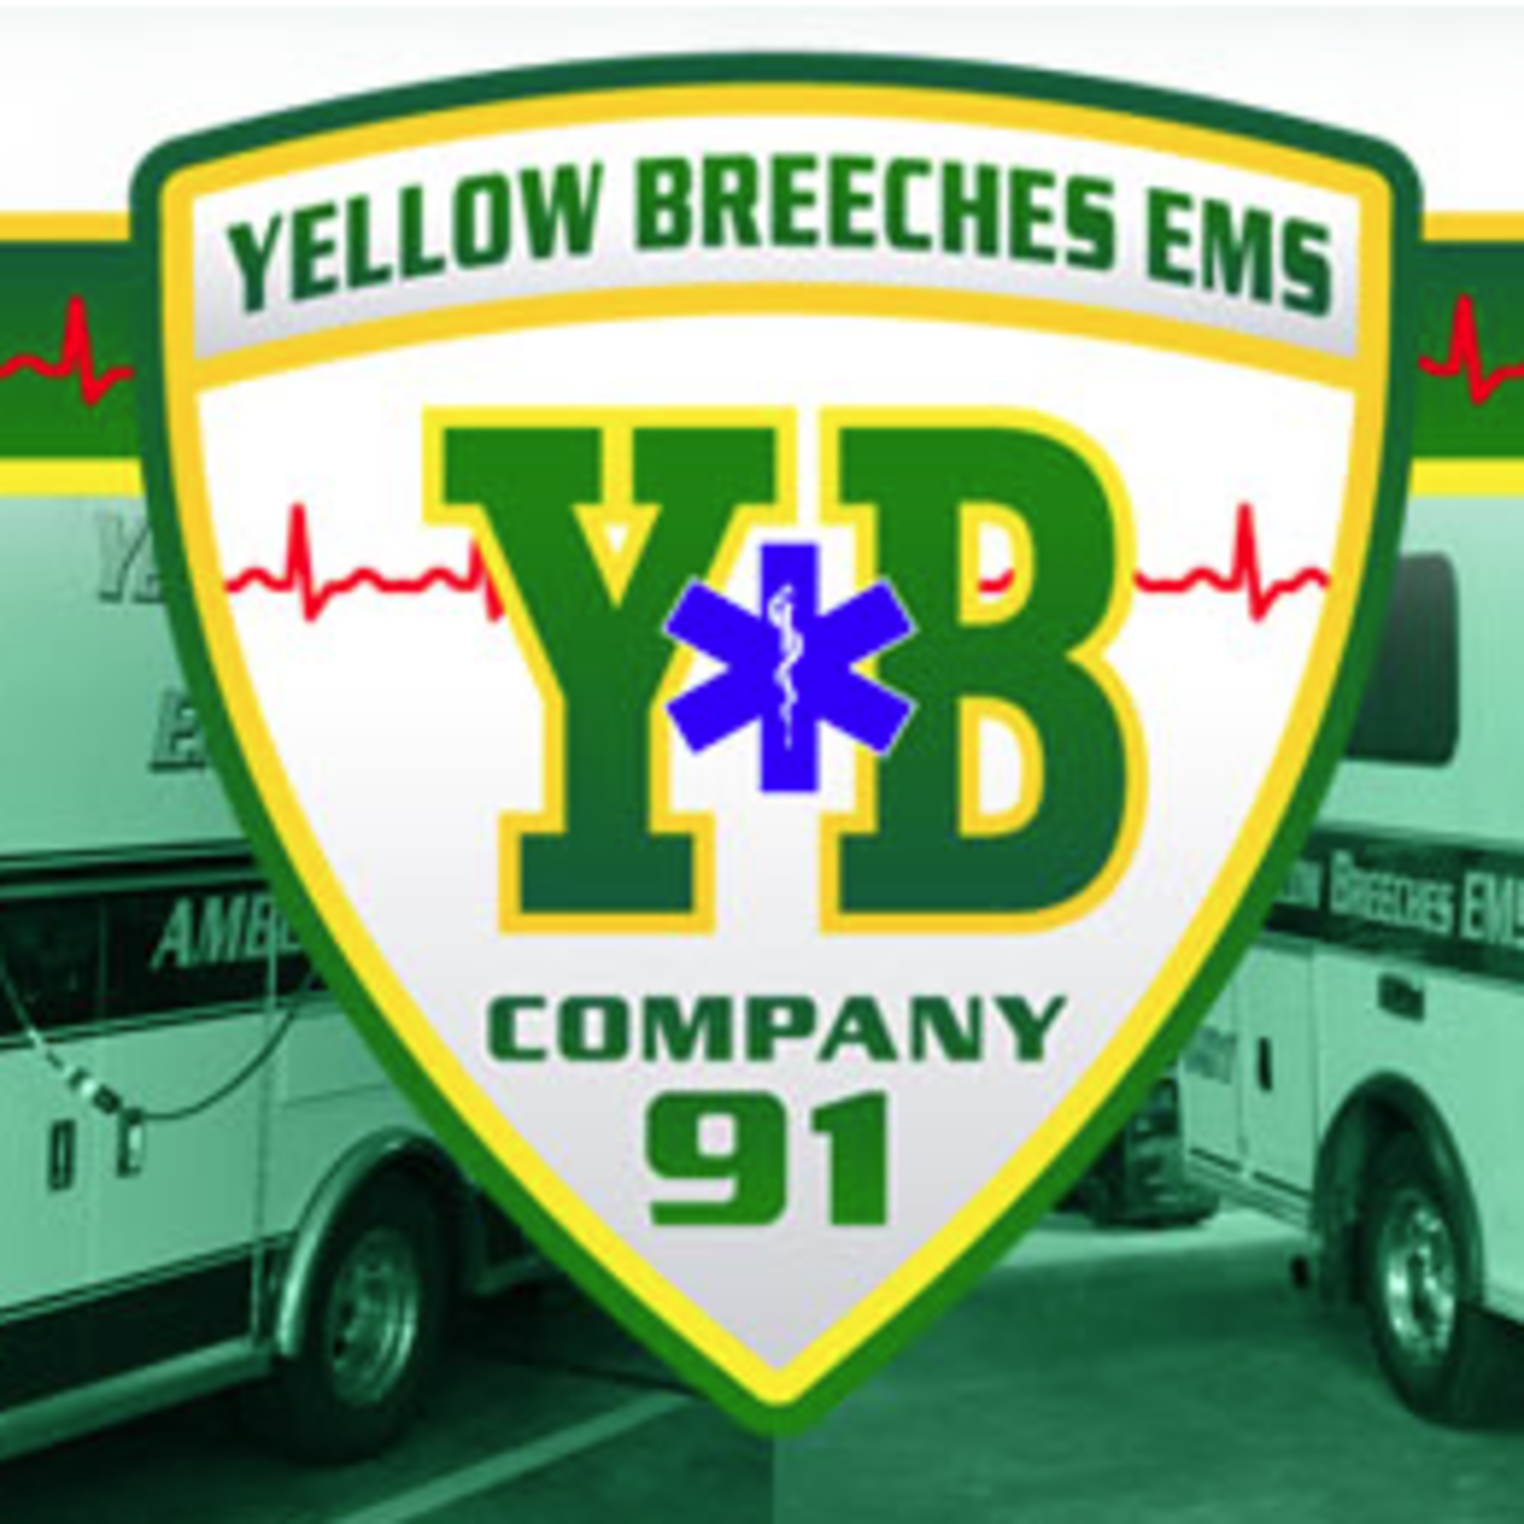 Yellow Breeches EMS